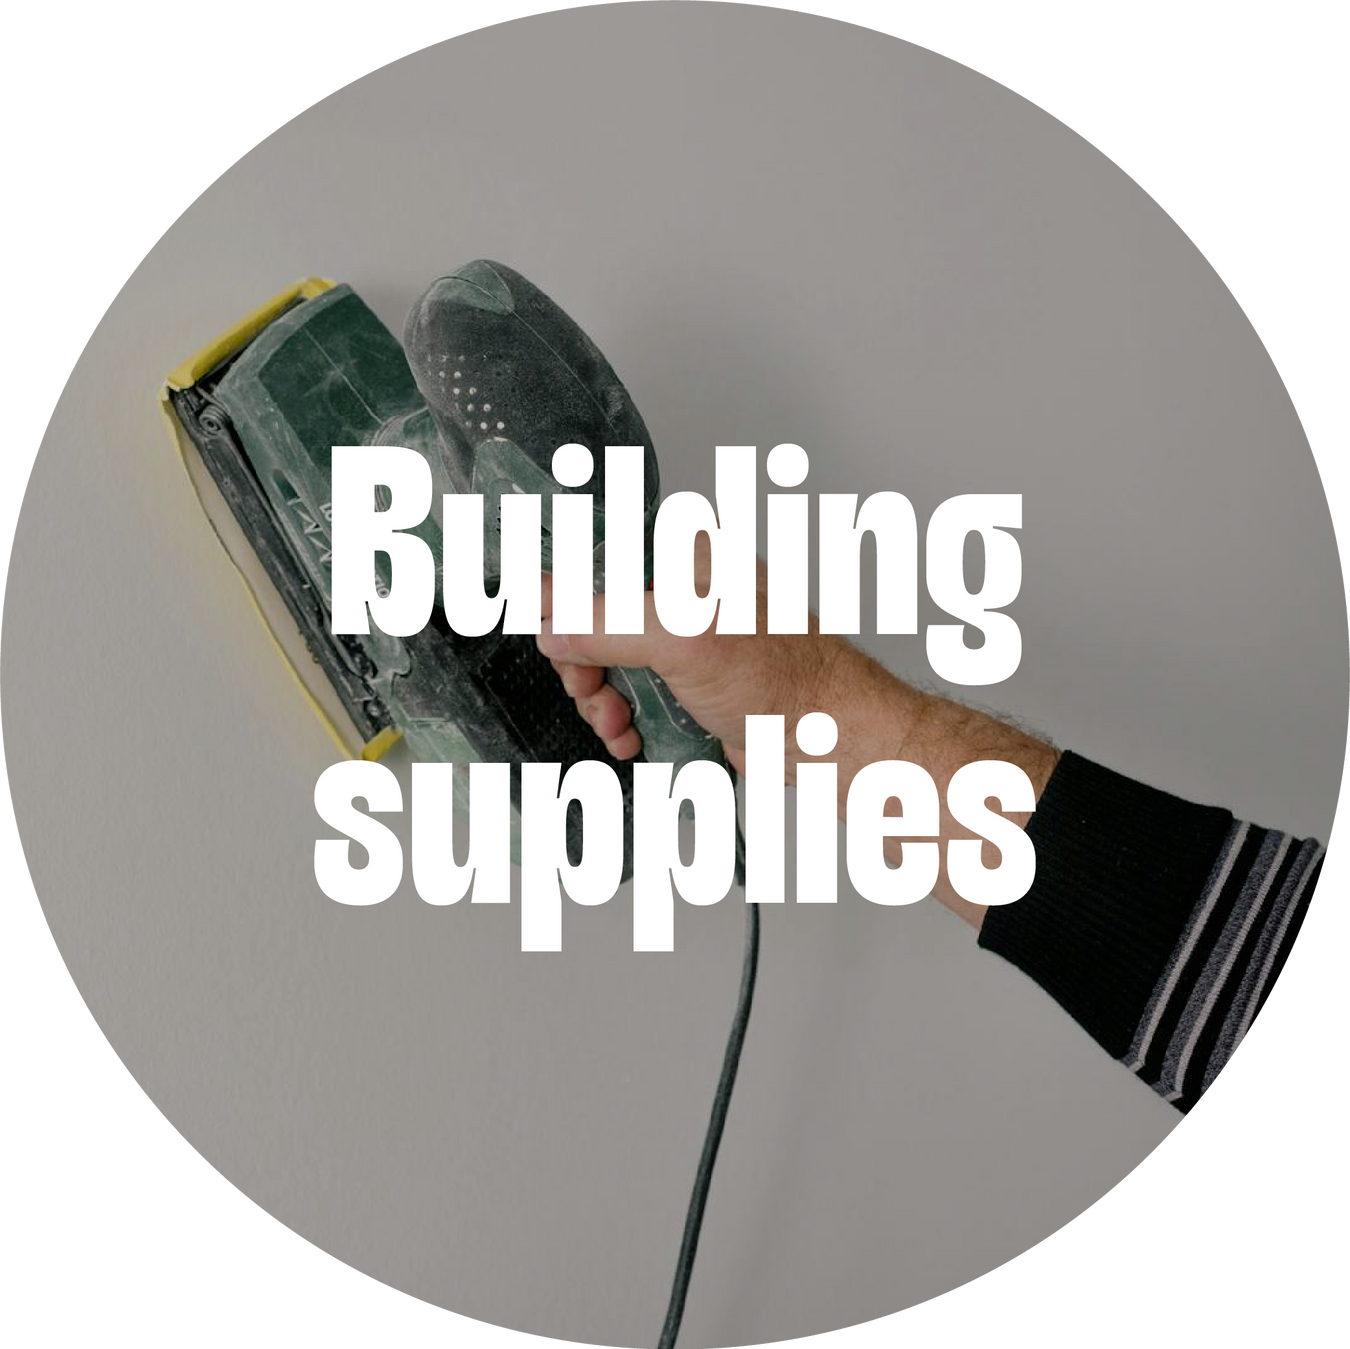 Building supplies